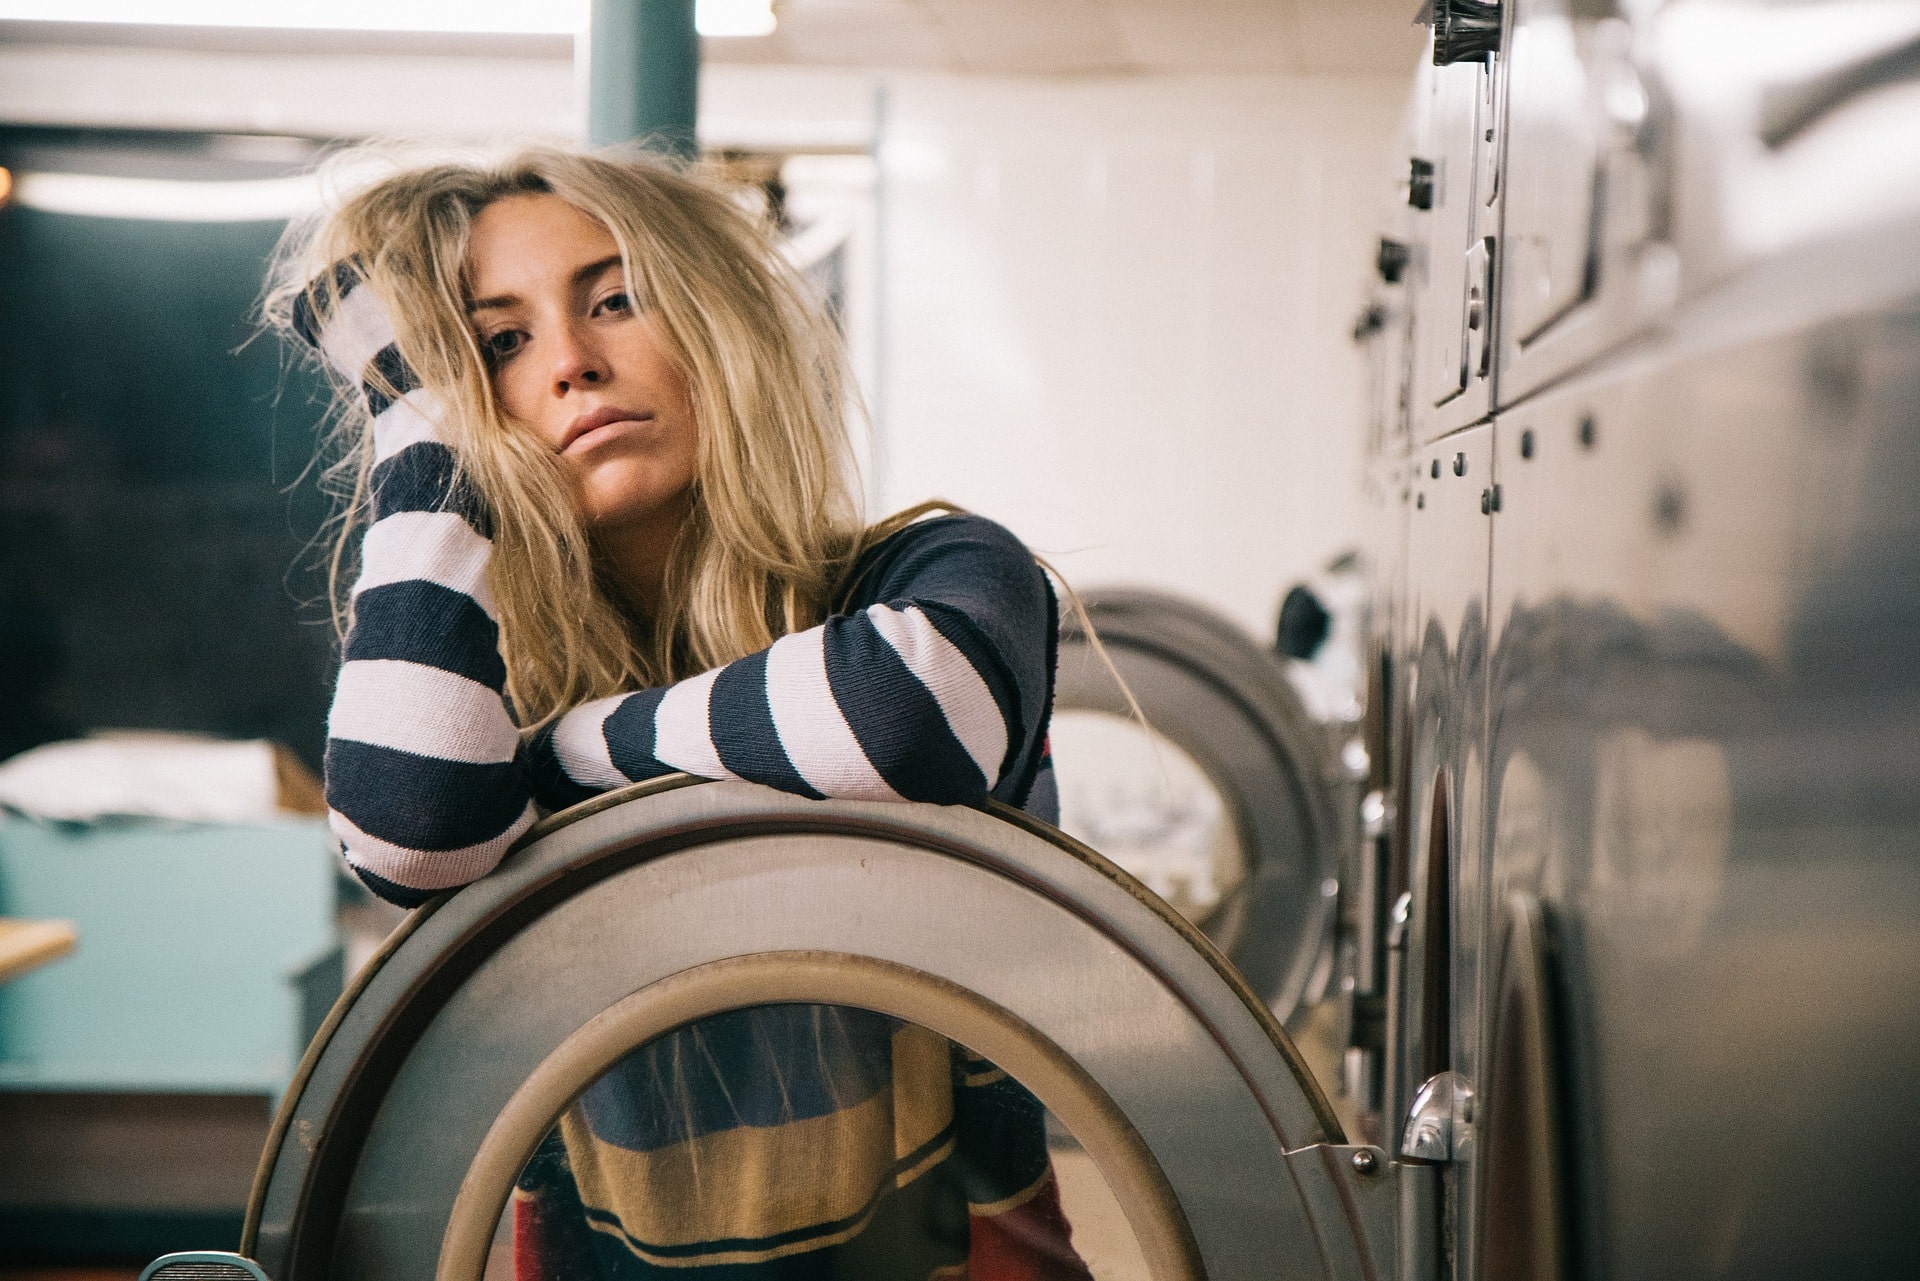 woman stnding on washing machine door